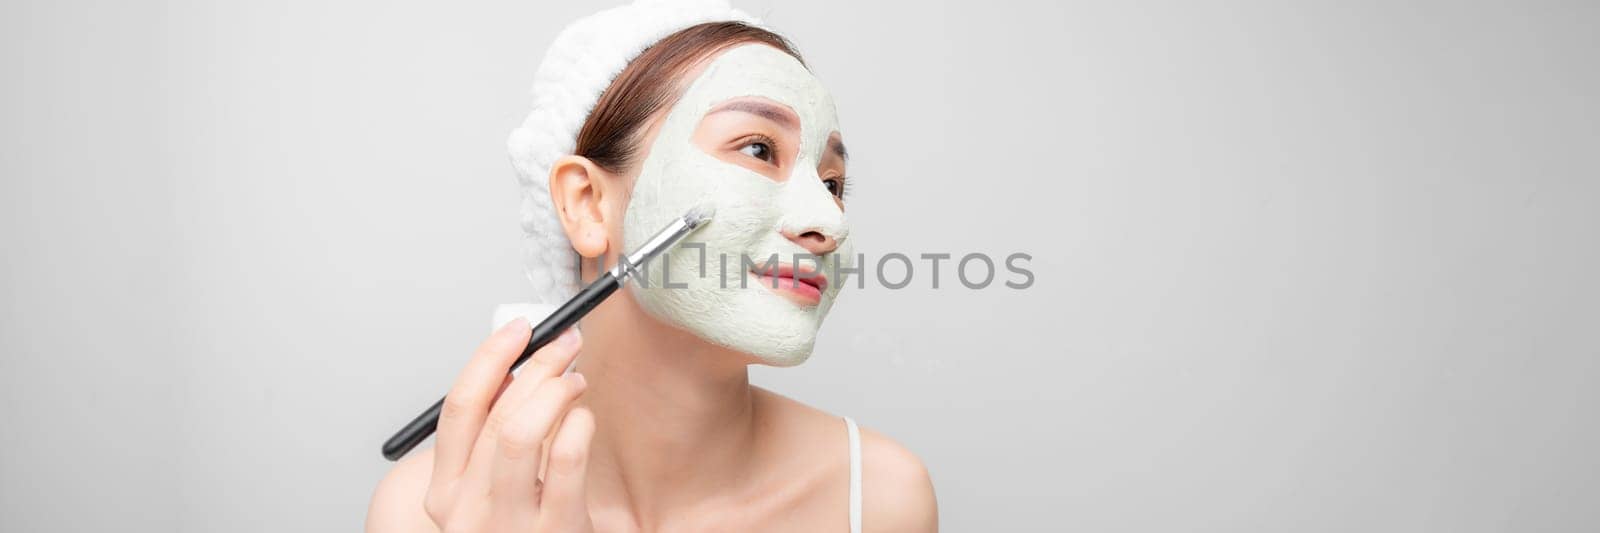 Beautiful woman having clay facial mask apply by beautician.